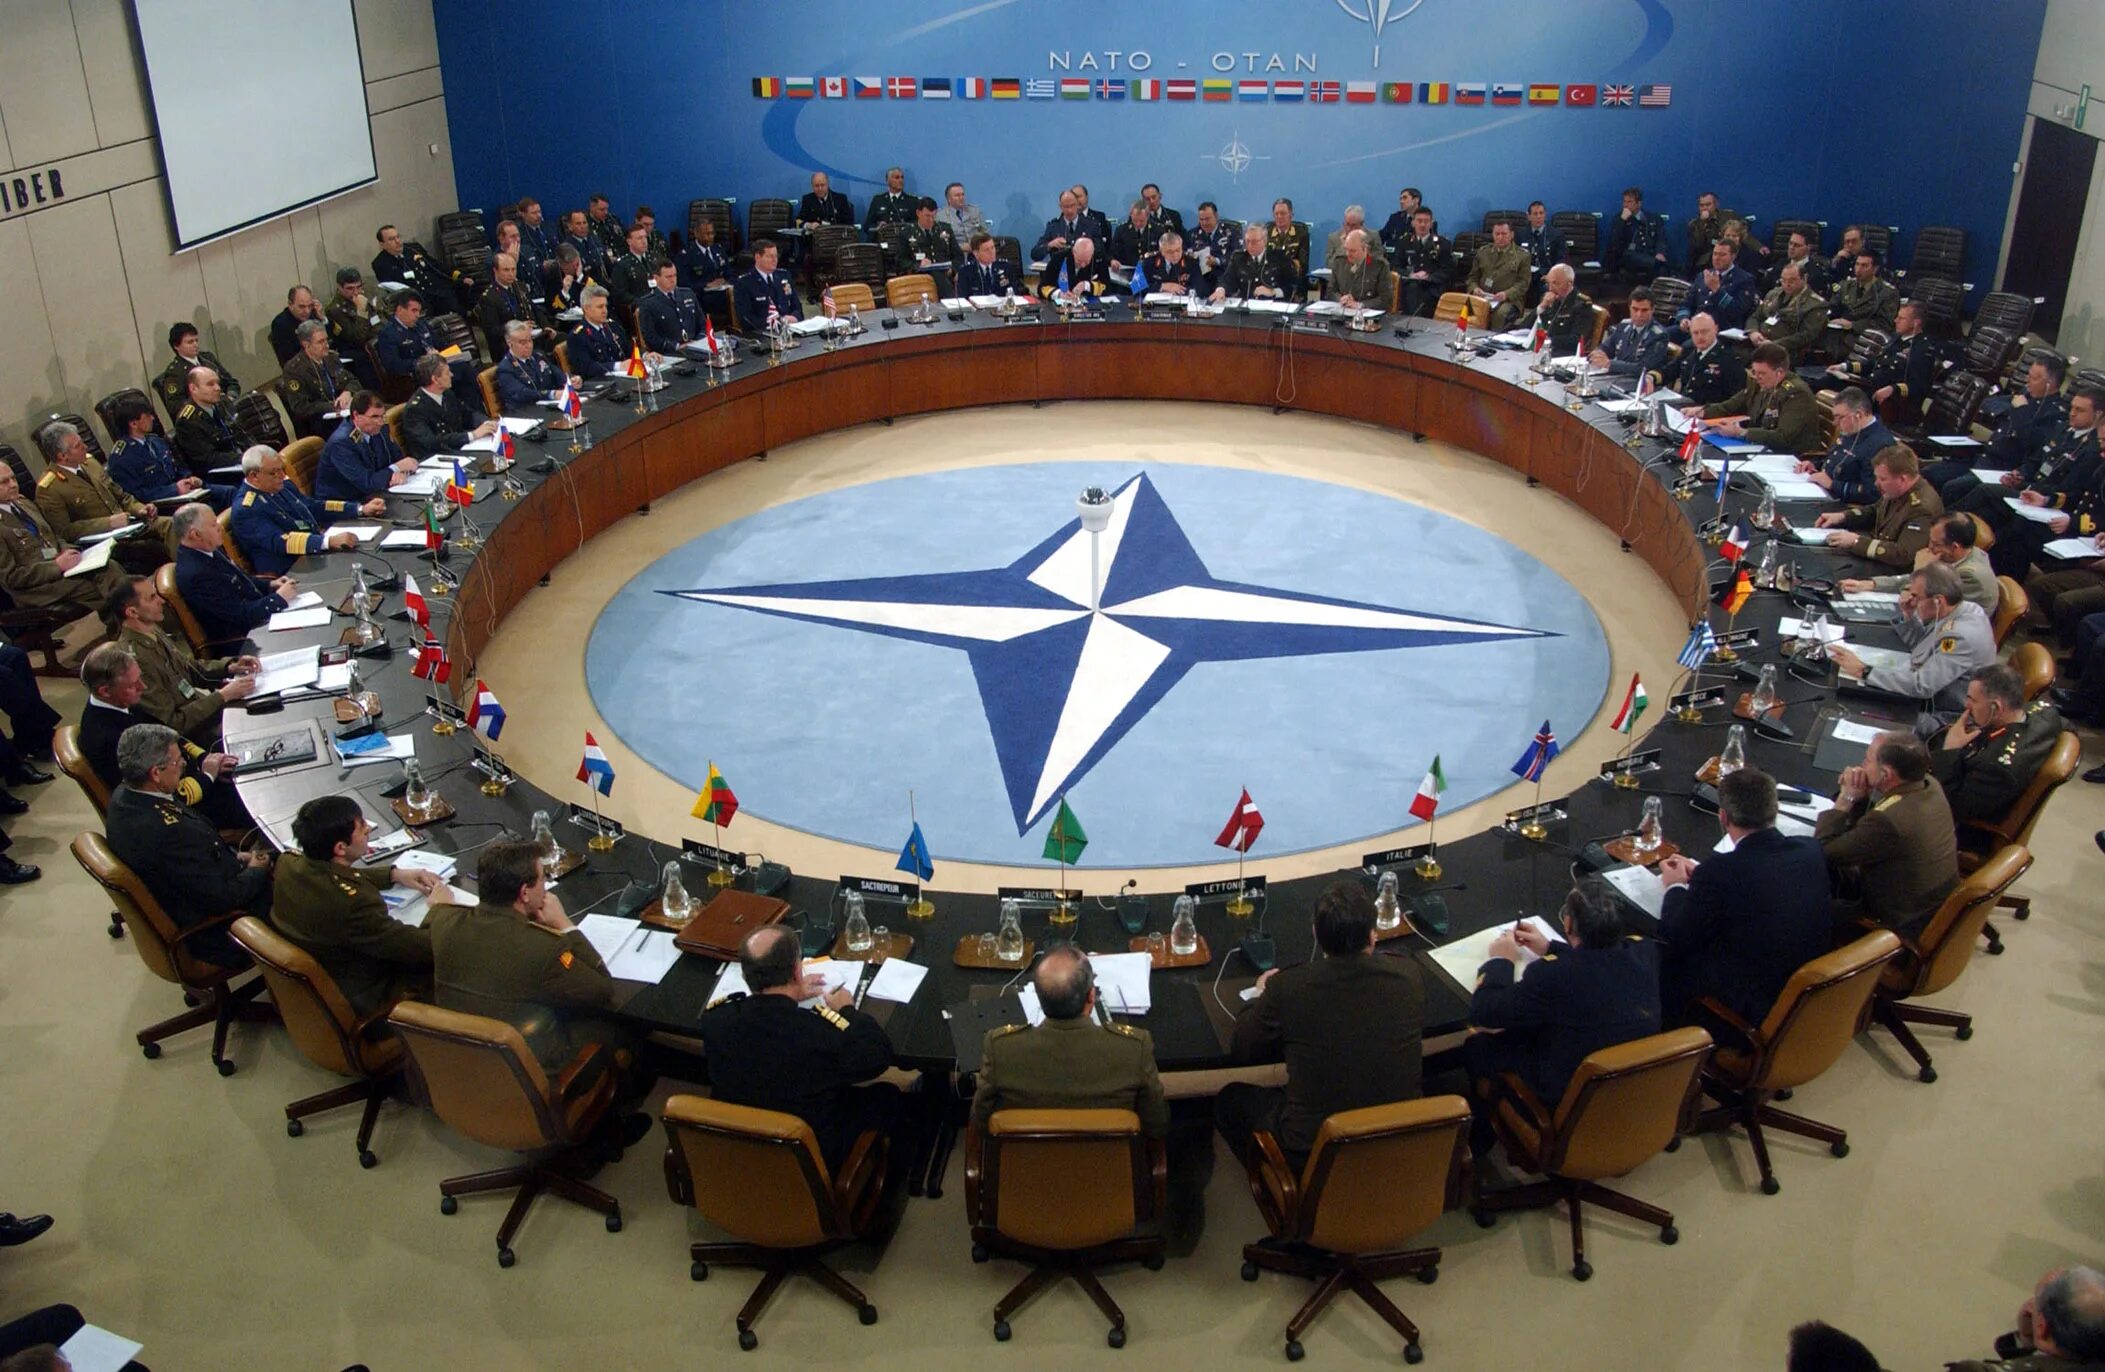 Выступления нато. Североатлантический Альянс НАТО. НАТО North Atlantic Treaty Organization. Саммит НАТО В Мадриде. Образование Североатлантического Союза НАТО.